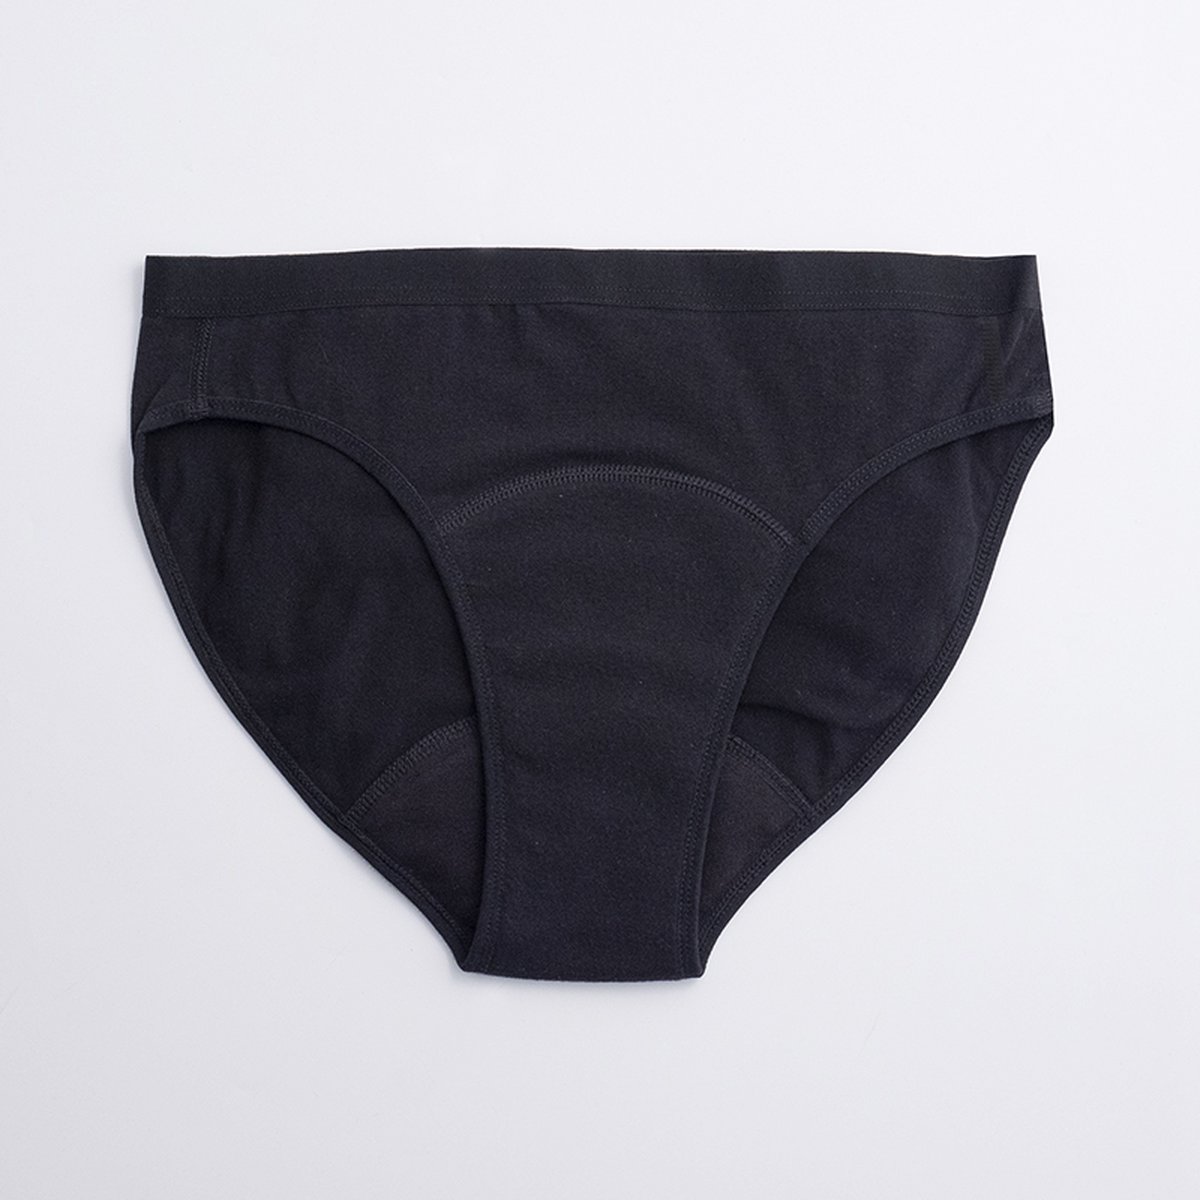 ImseVimse - Imse - menstruatieondergoed - Bikini model period underwear - matige menstruatie - L - eur 44/46 - zwart